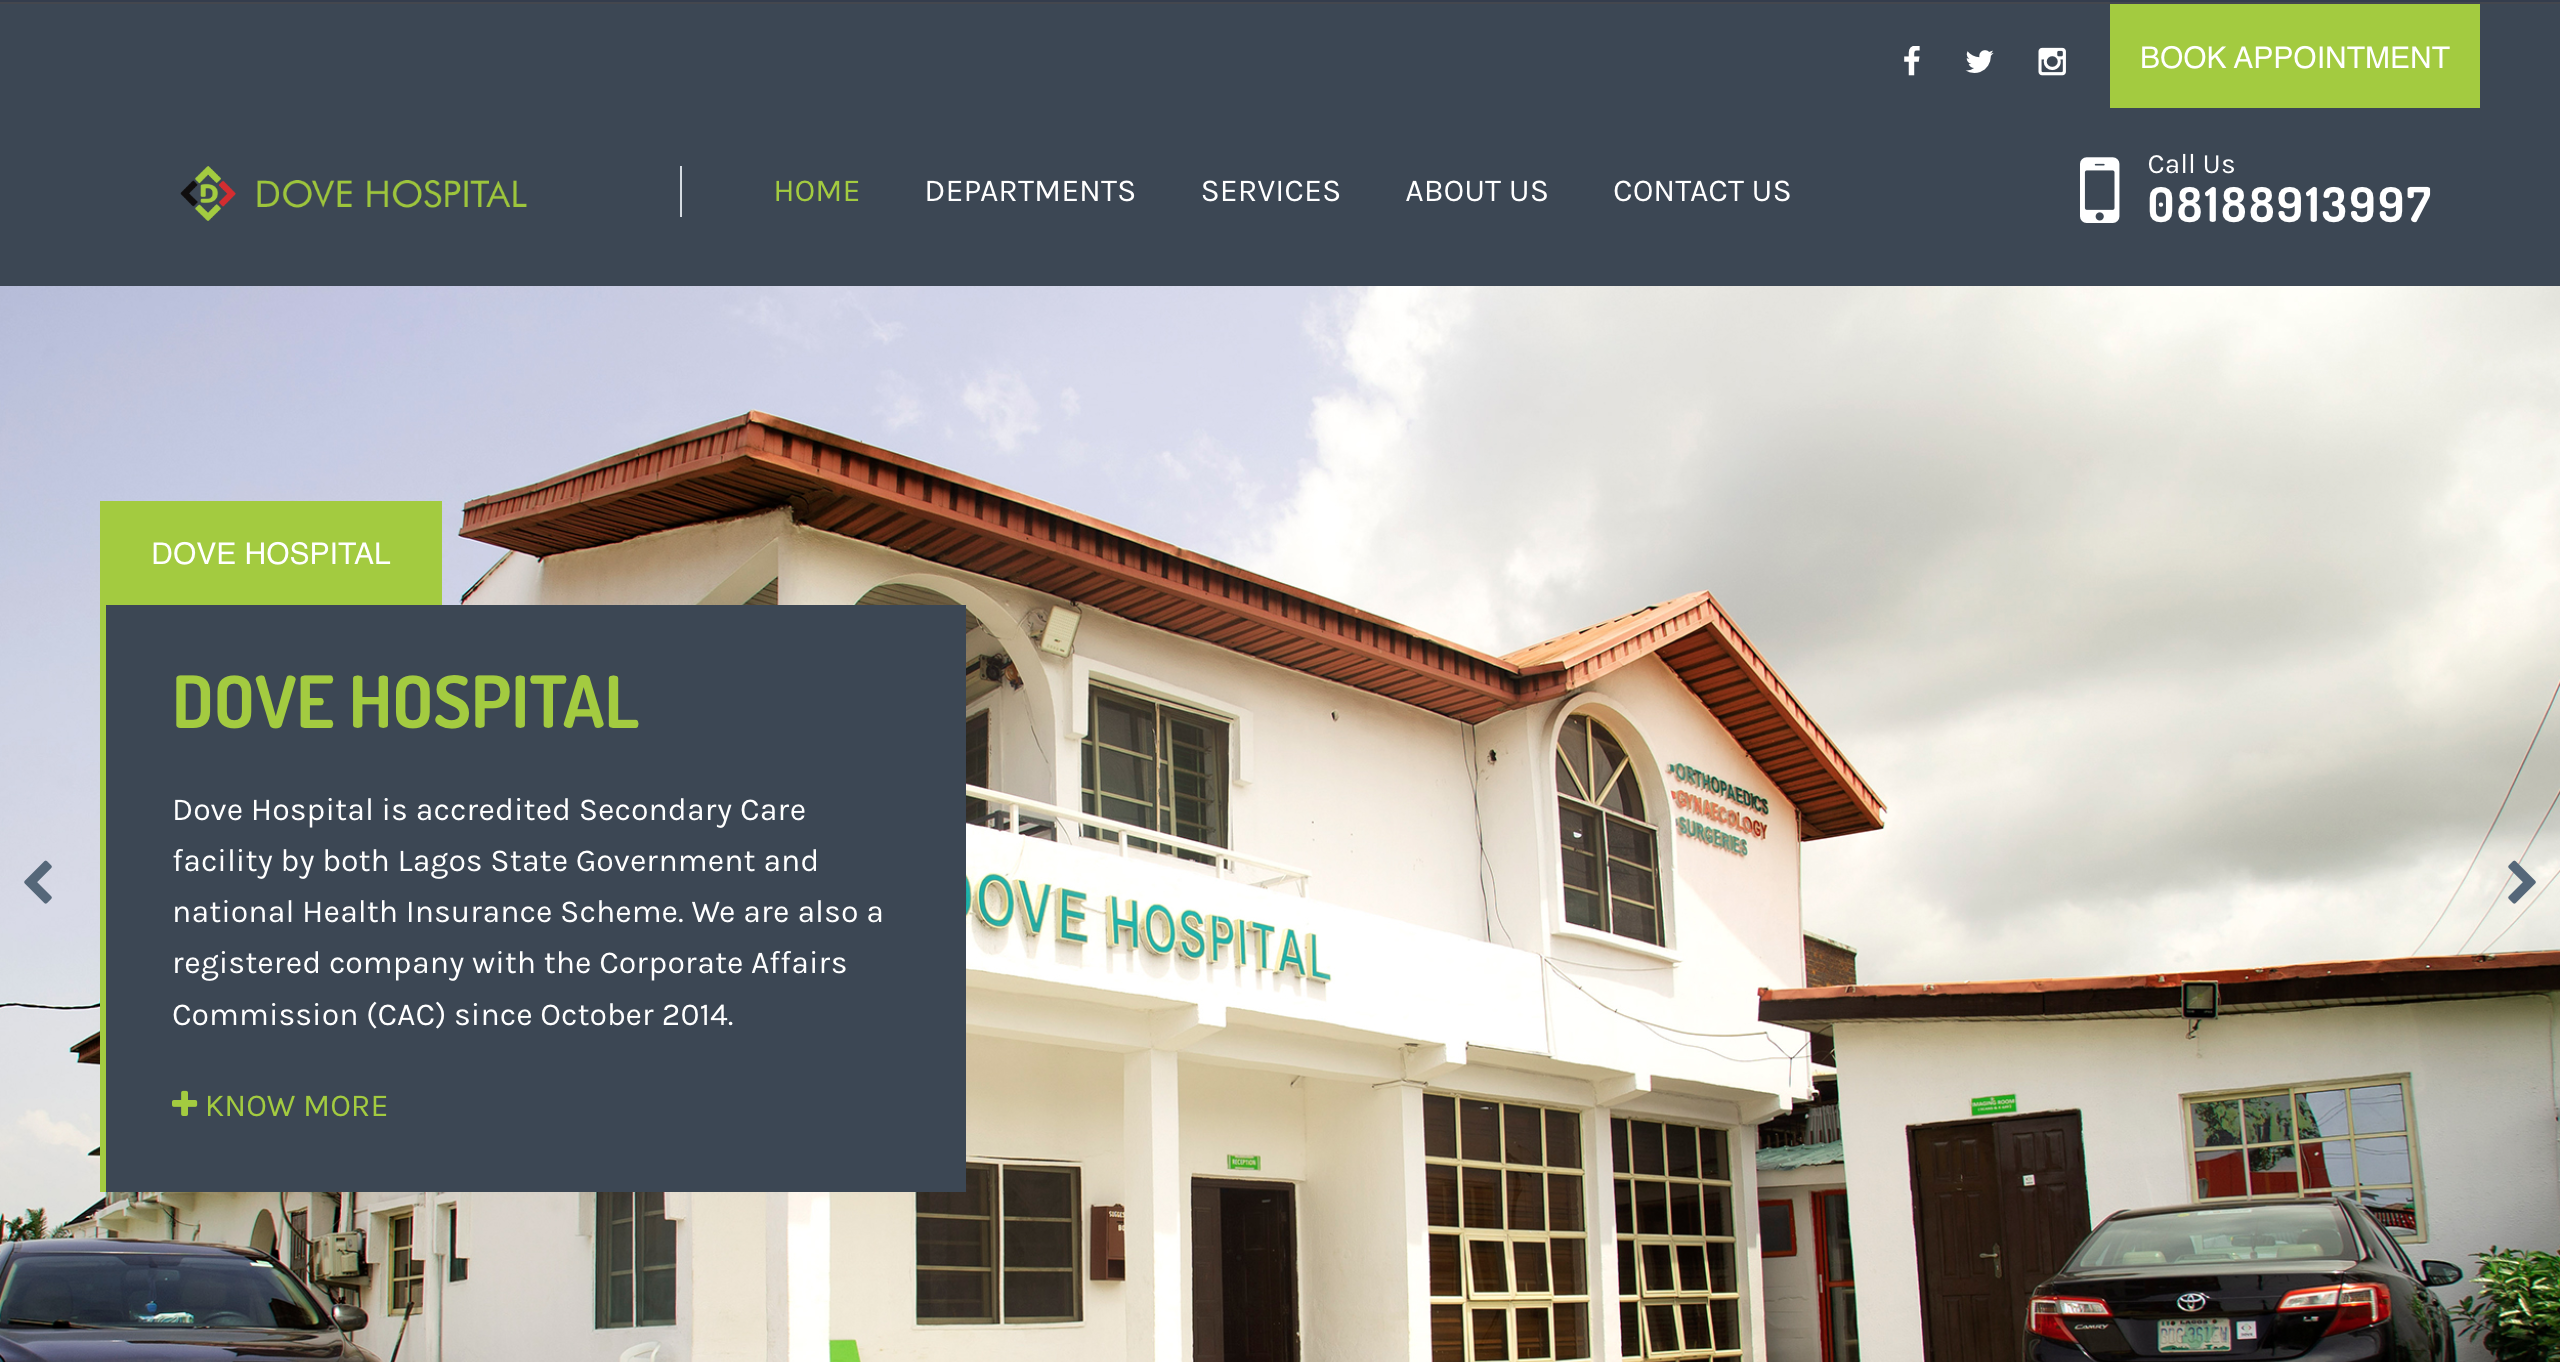 Profile of Dove Hospital